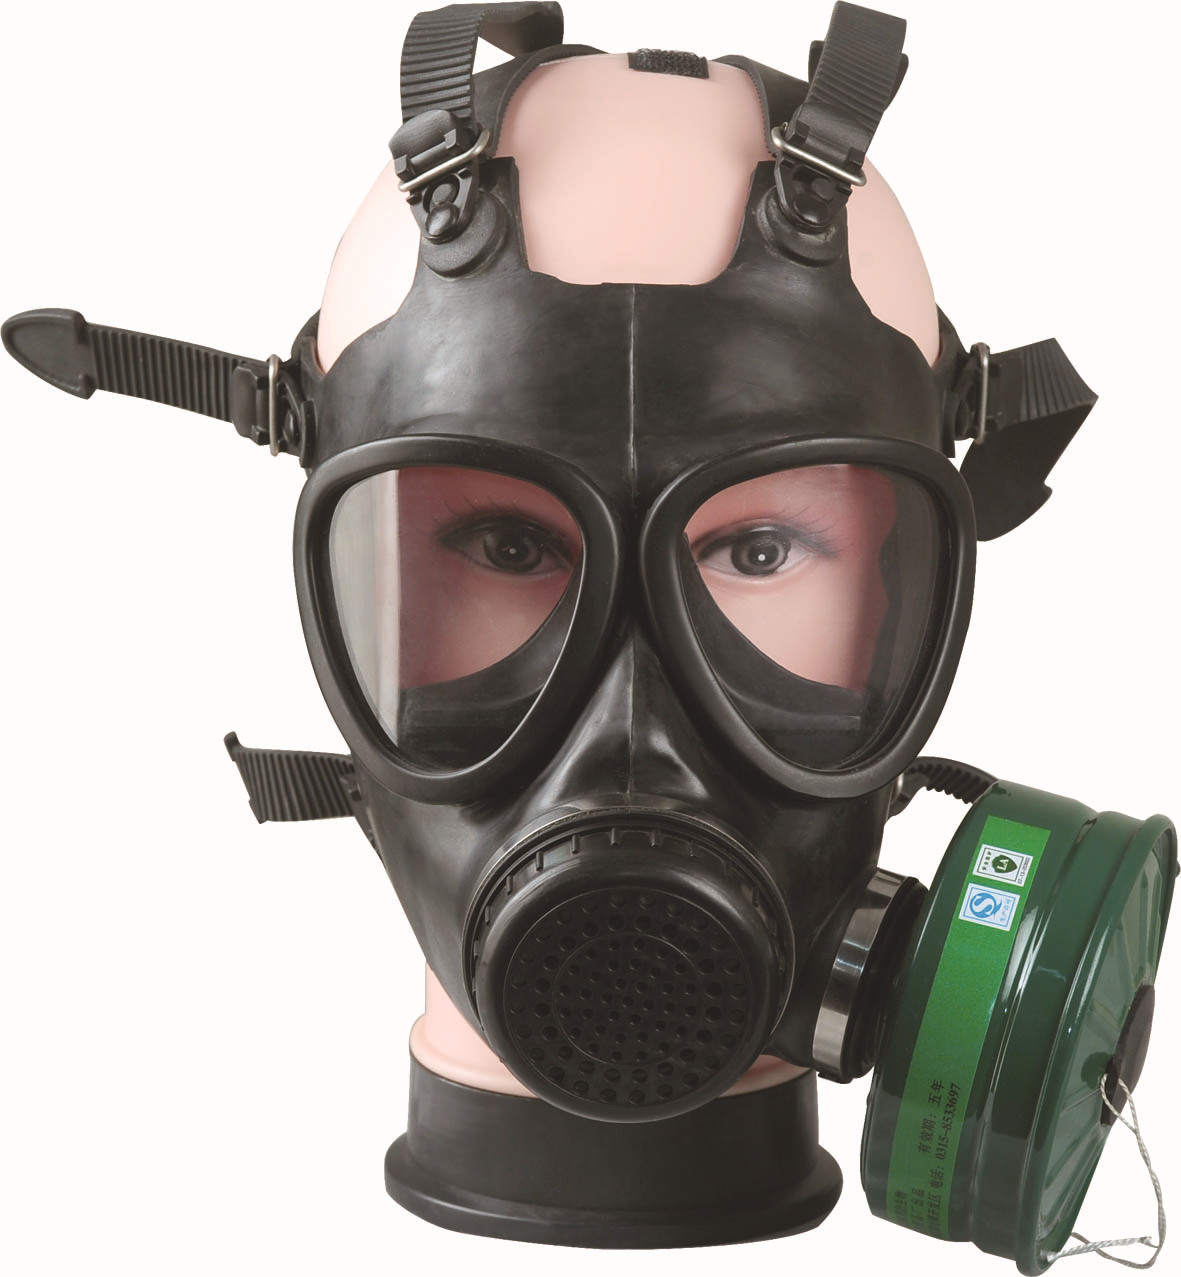 fmj10型防毒面具图片